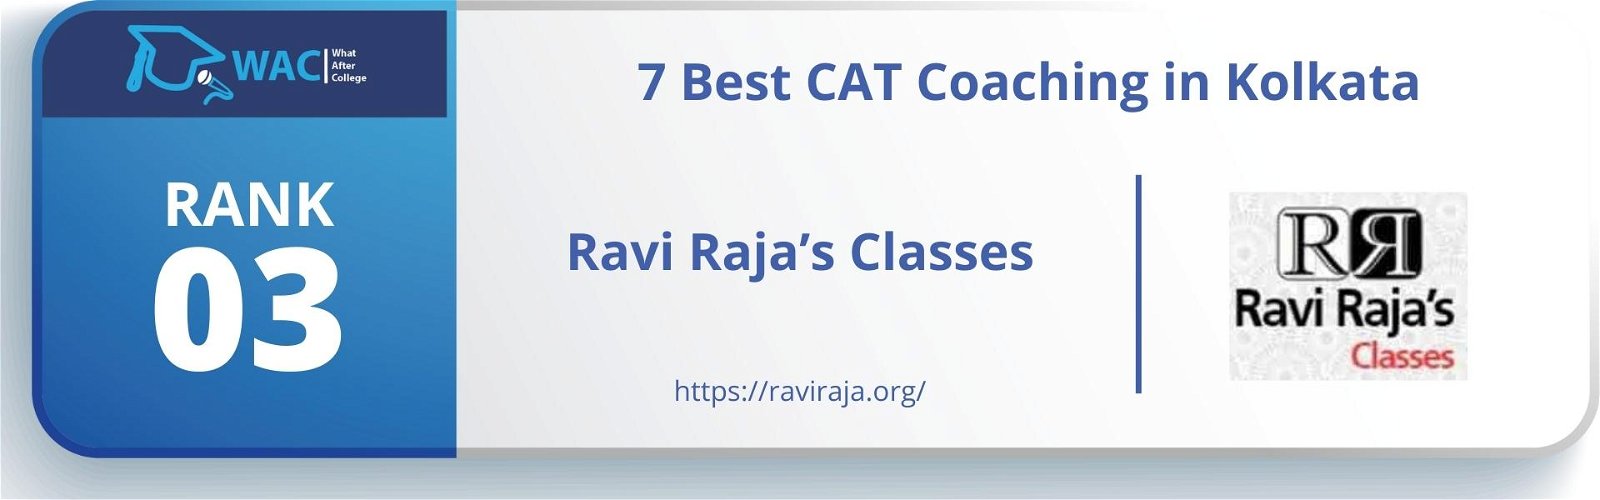 CAT Coaching in Kolkata